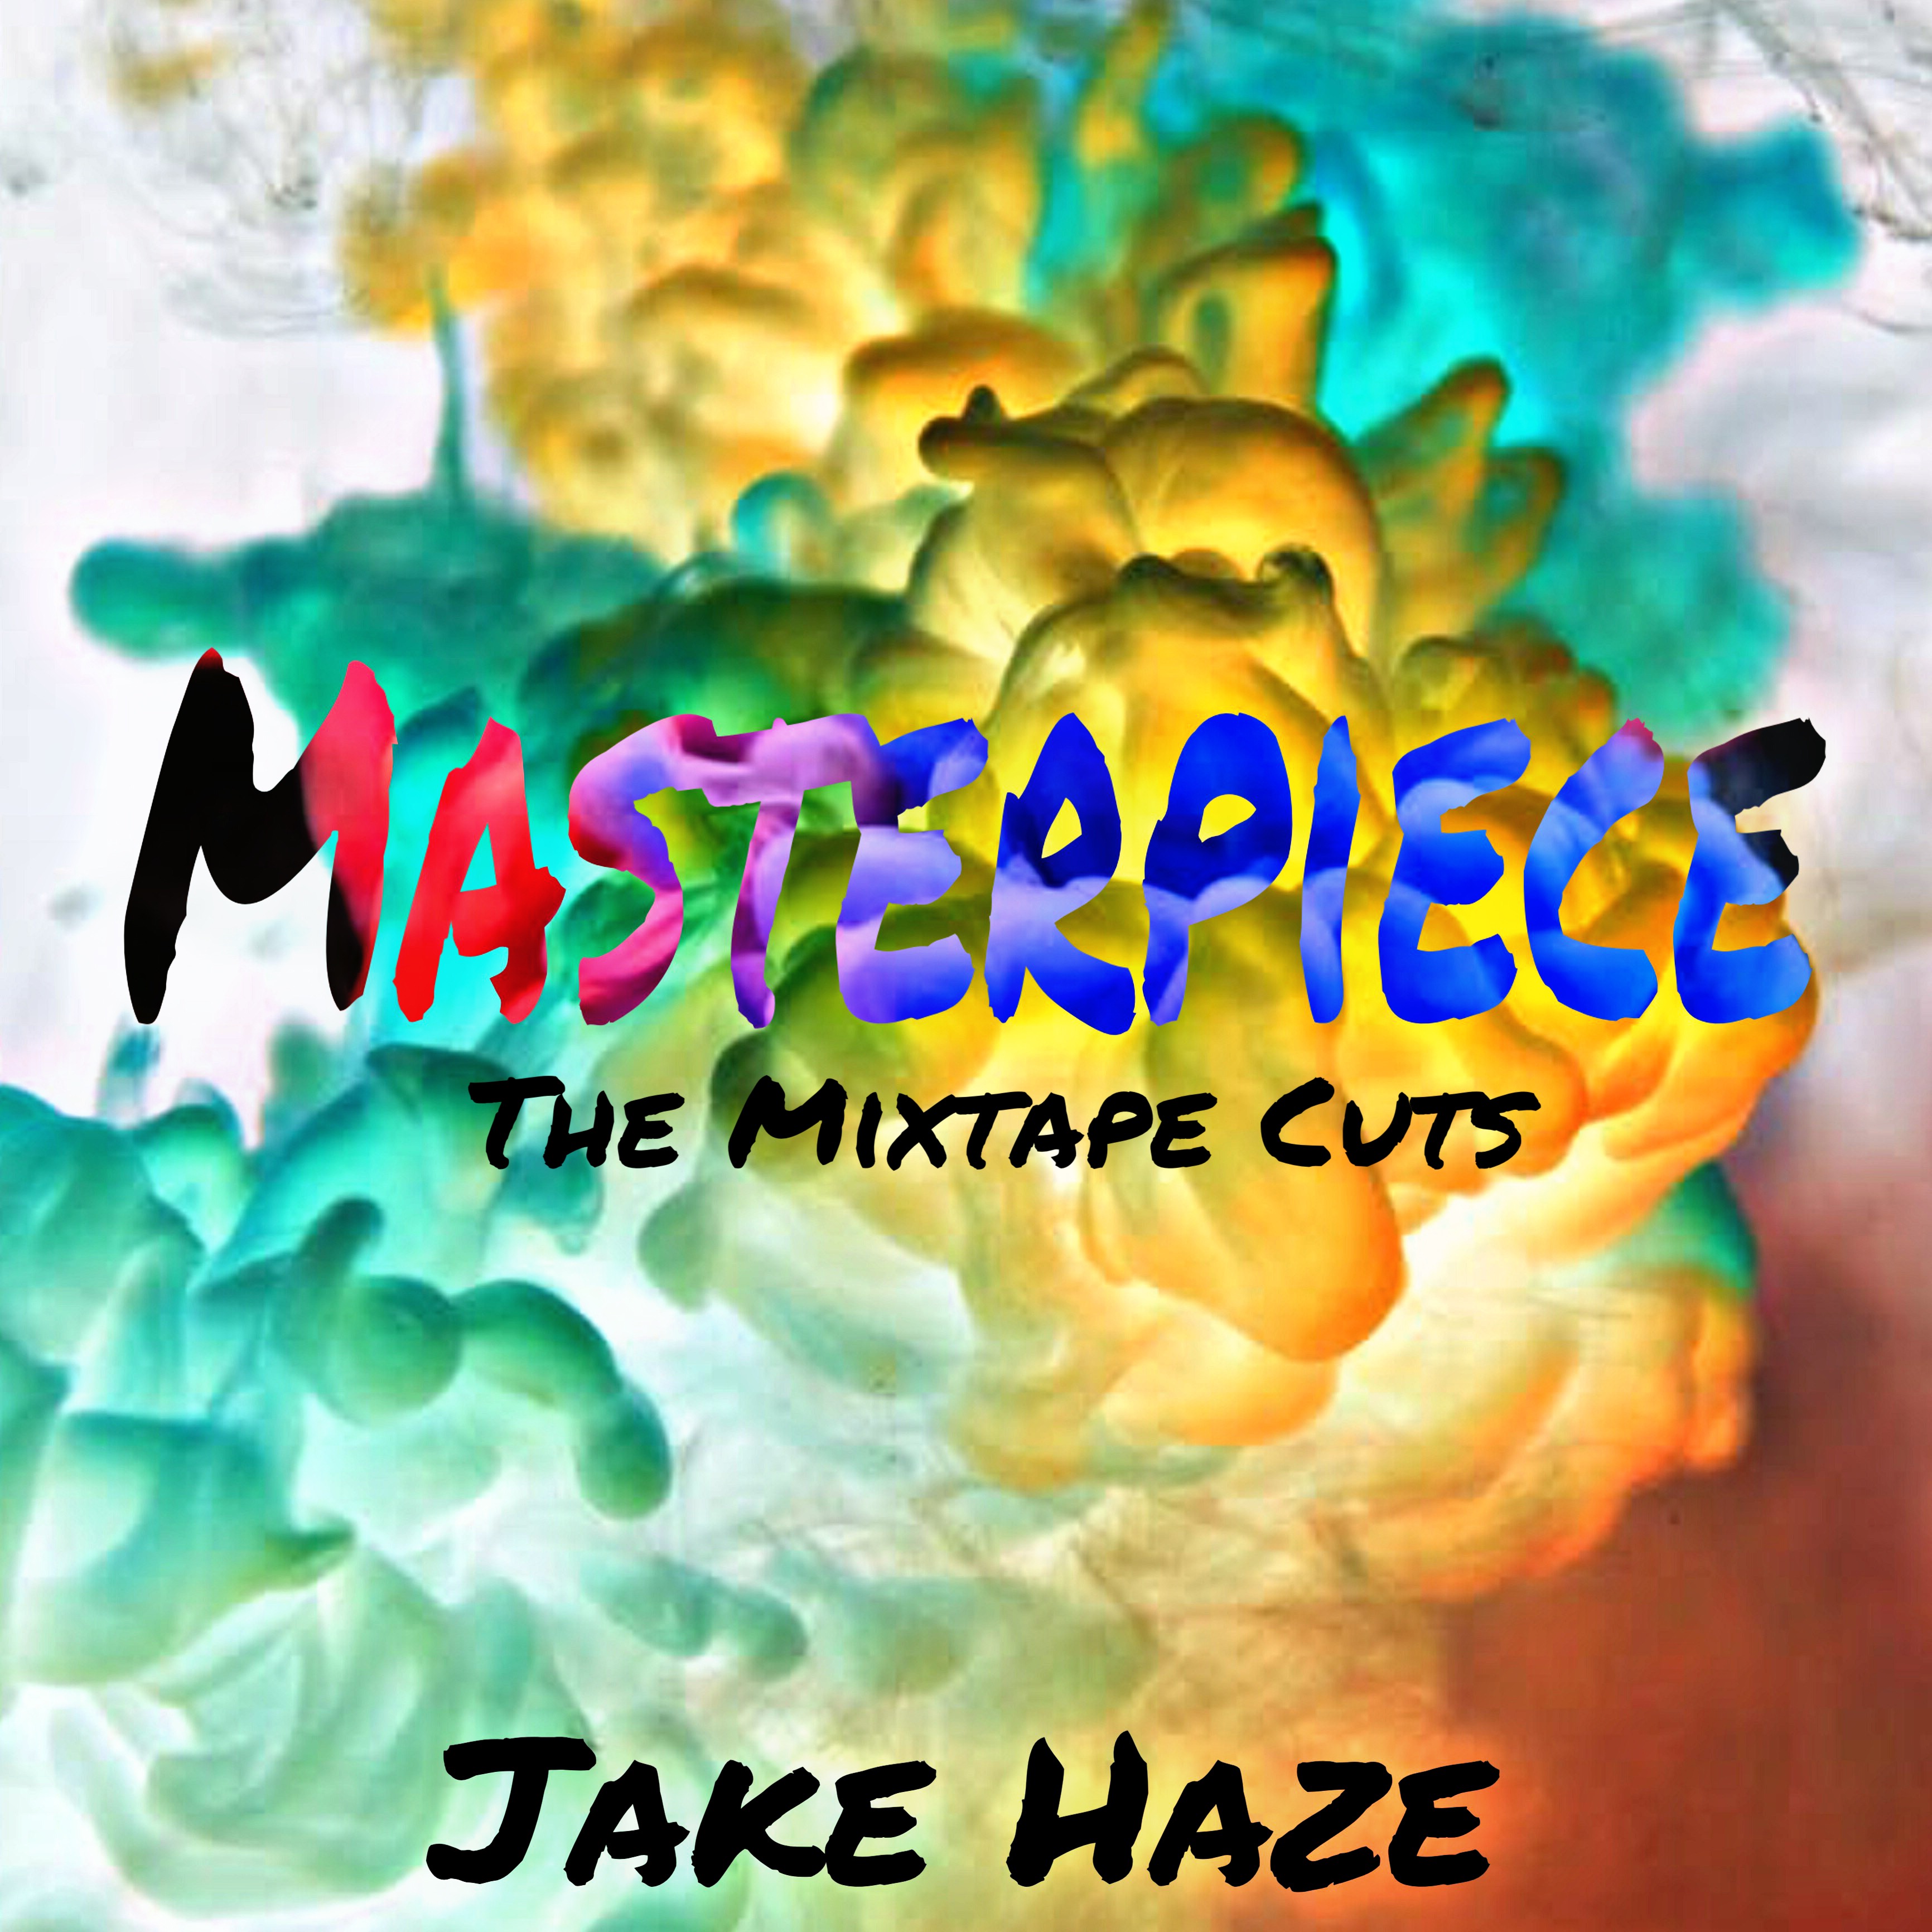 Sponsored Mixtape Post: Jake Haze – “Masterpiece”